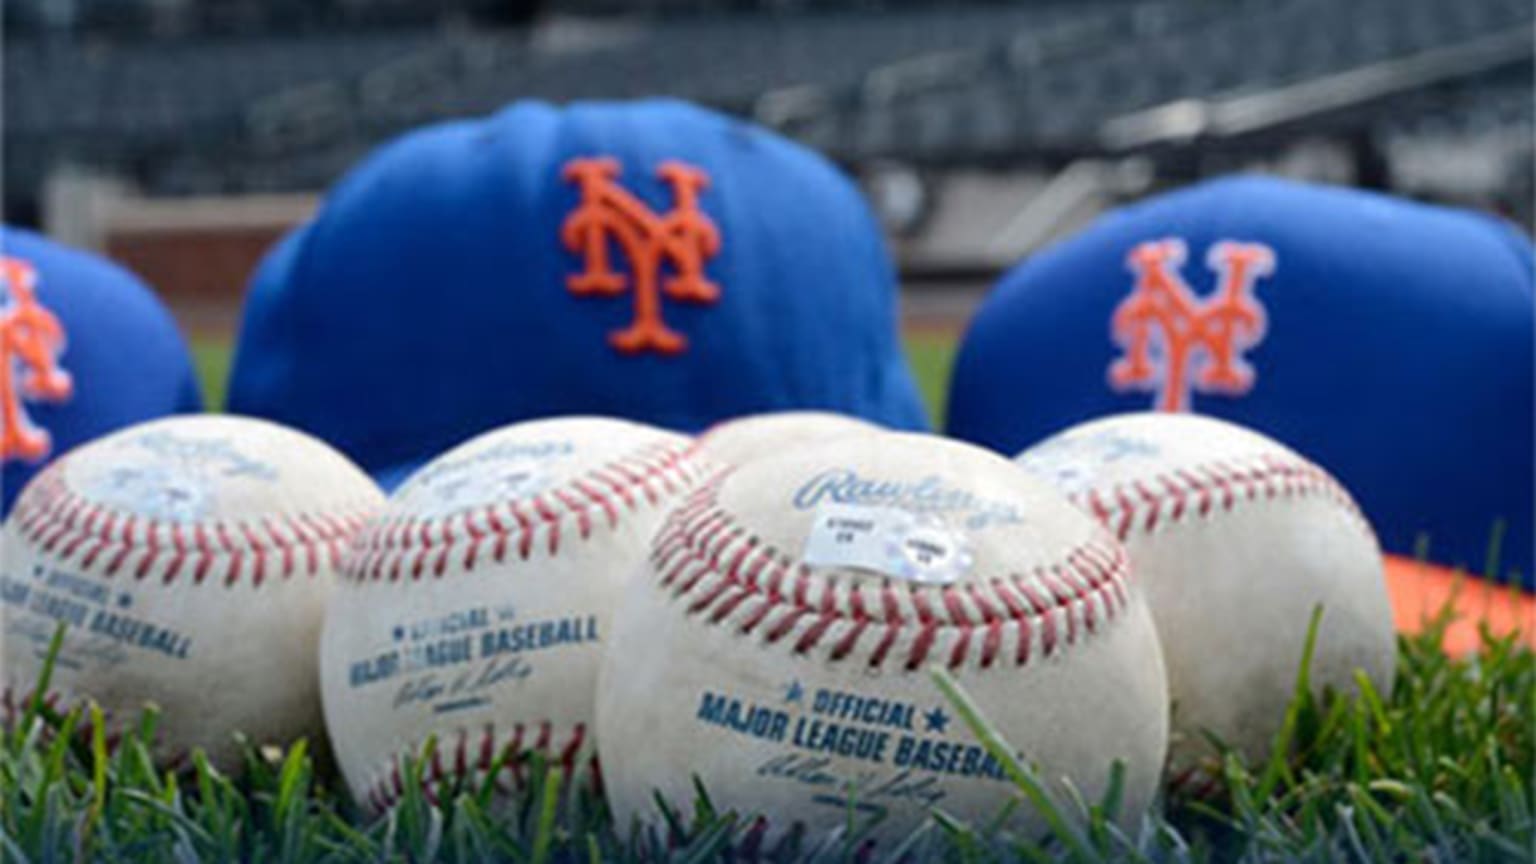 New York Mets MLB Balls for sale